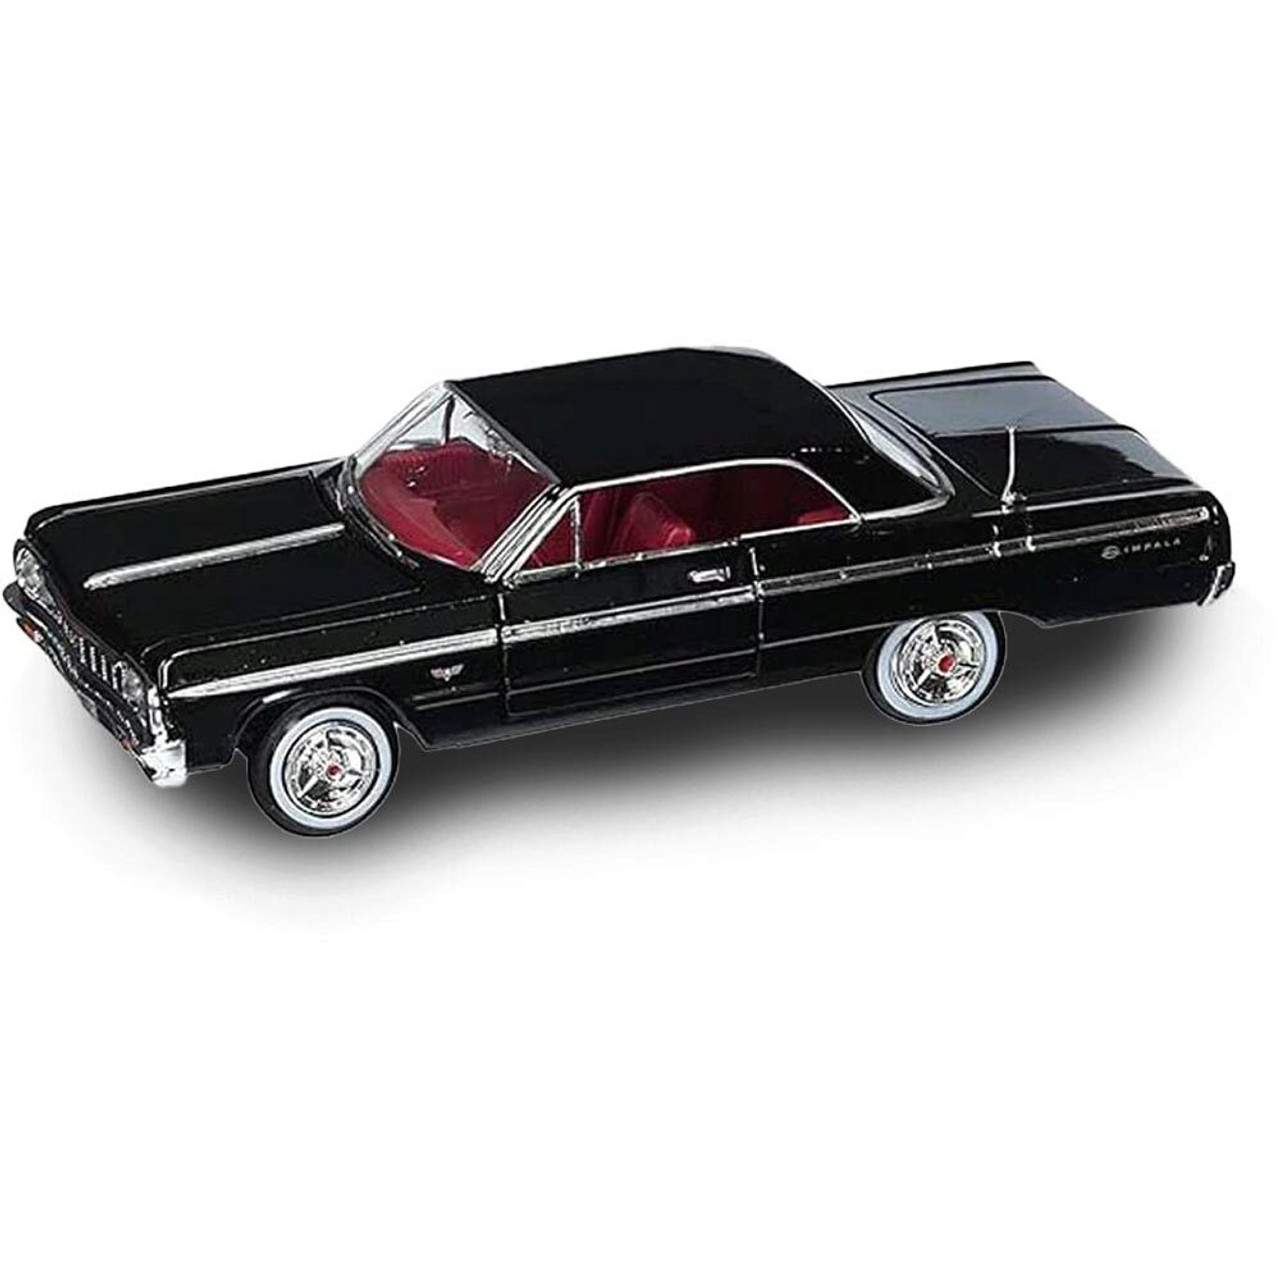 1964 Chevrolet Impala Lowrider - Black - Get Low - MiJo Exclusives 1:24  Scale Diecast Model Car